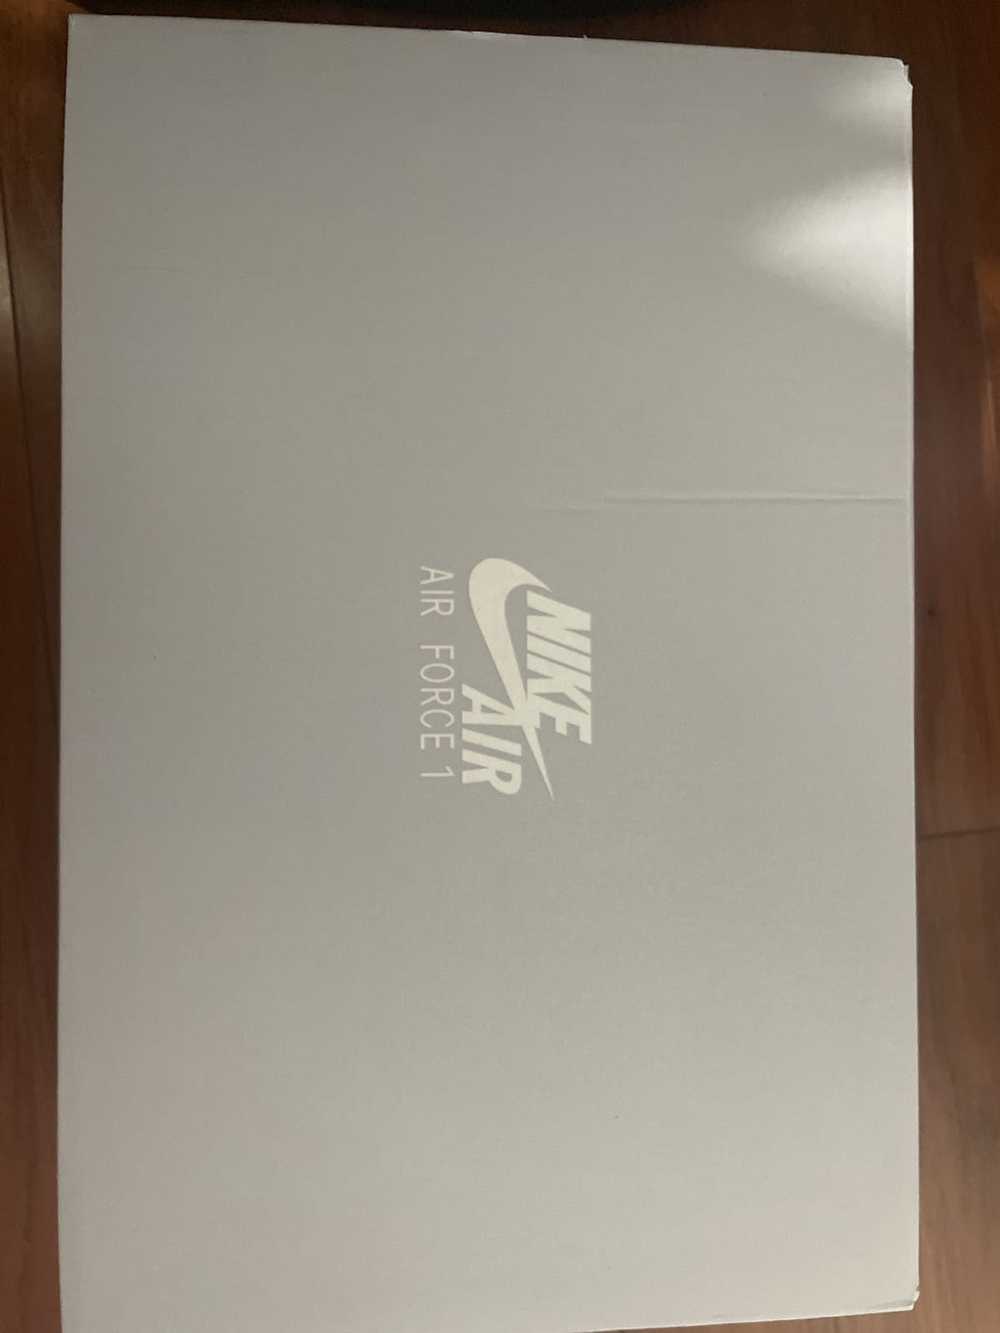 Nike Nike Air Force 1 “REACT” - image 8